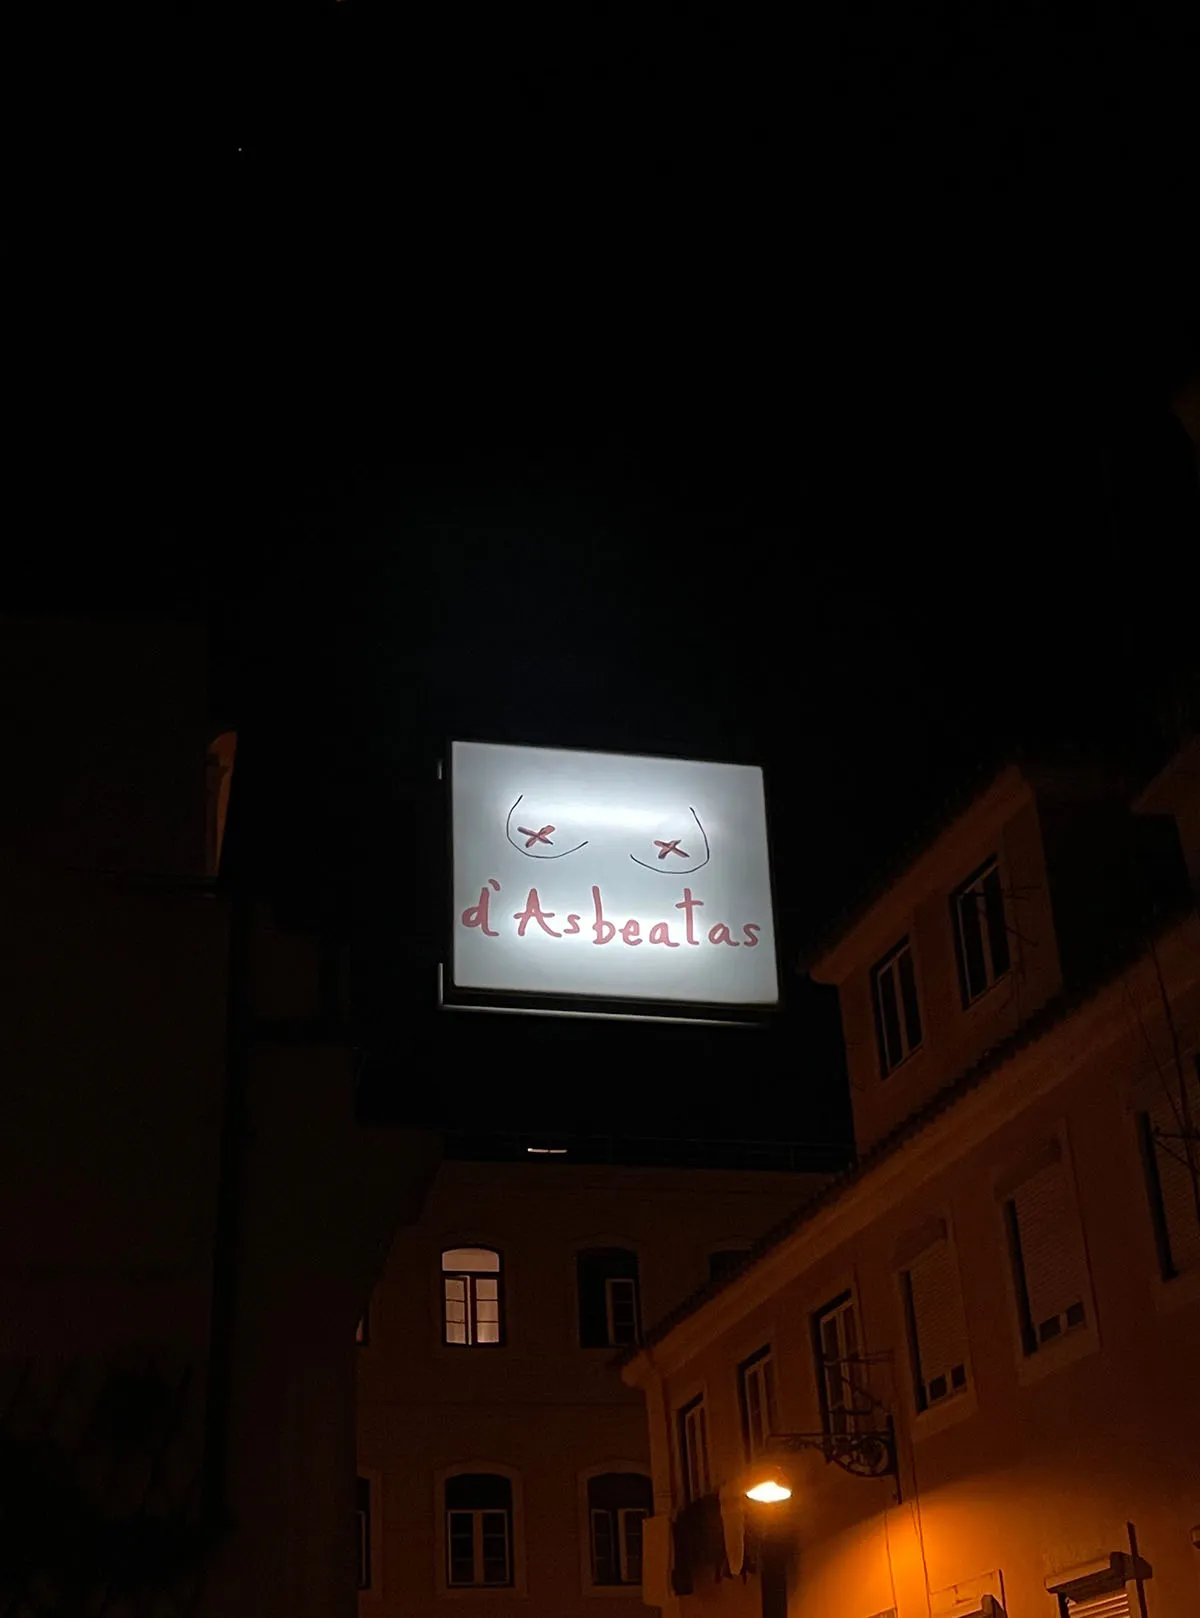 A restaurant sign in Lisbon.